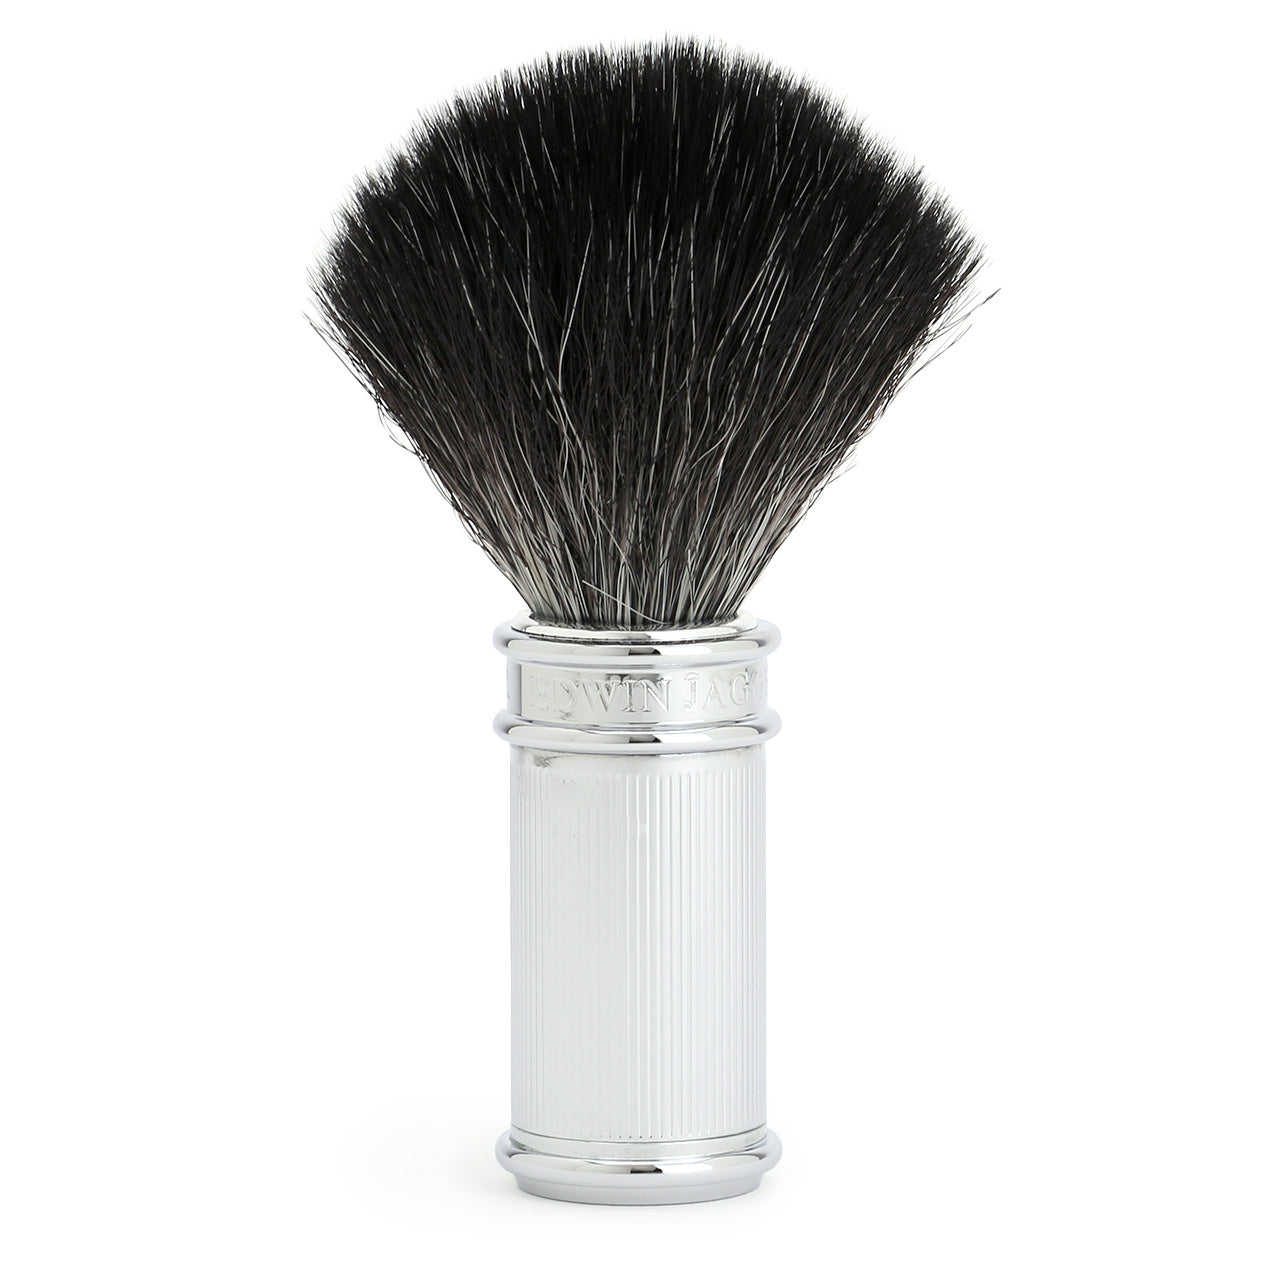 Edwin Jagger Chrome Lined Synthetic Shaving Brush